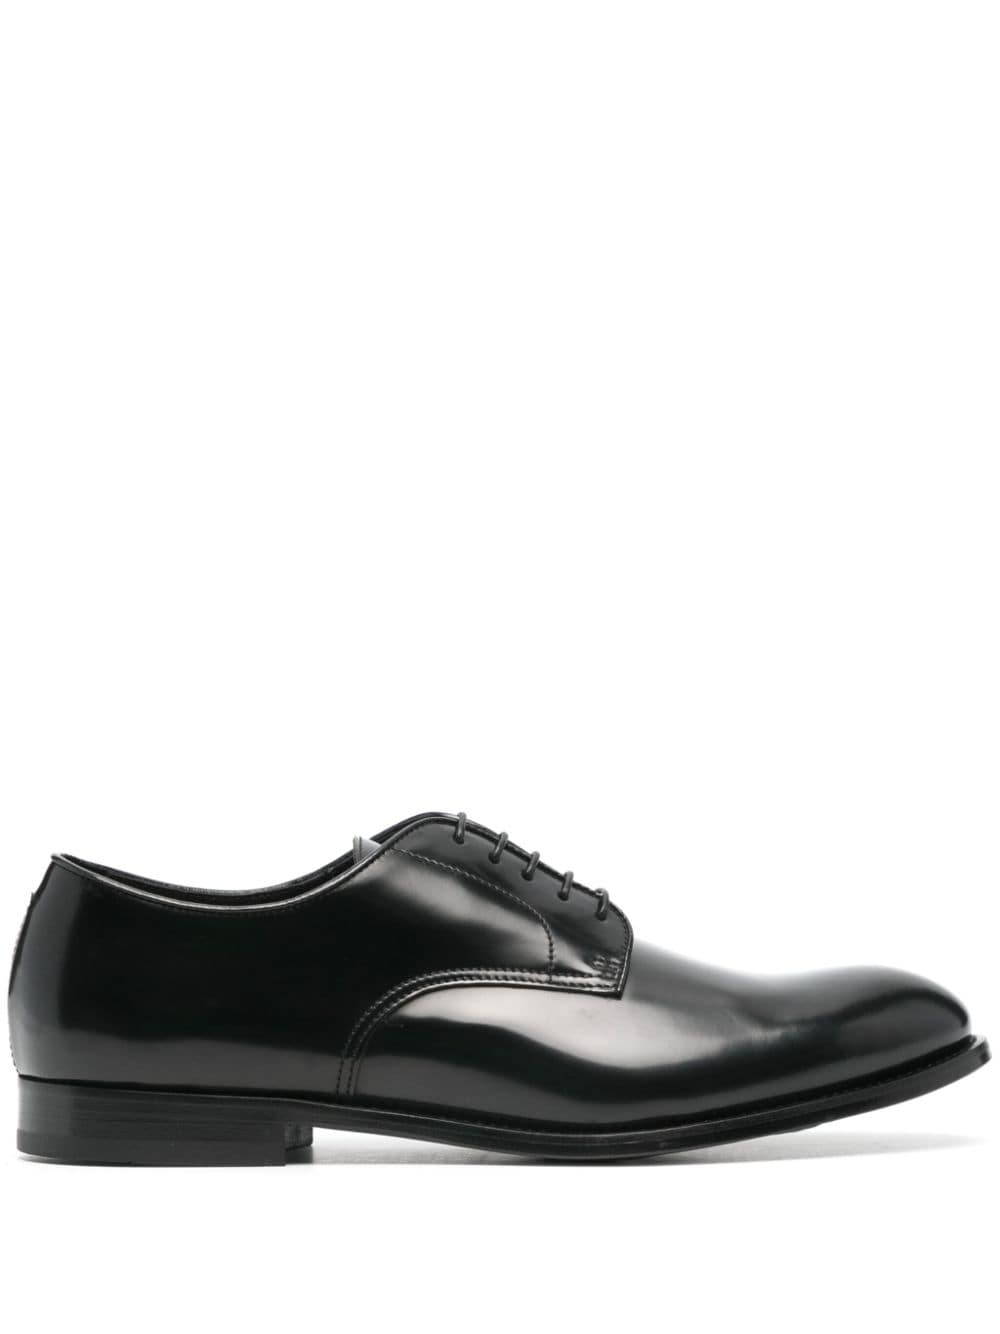 Doucal's patent leather oxford shoes - Black von Doucal's